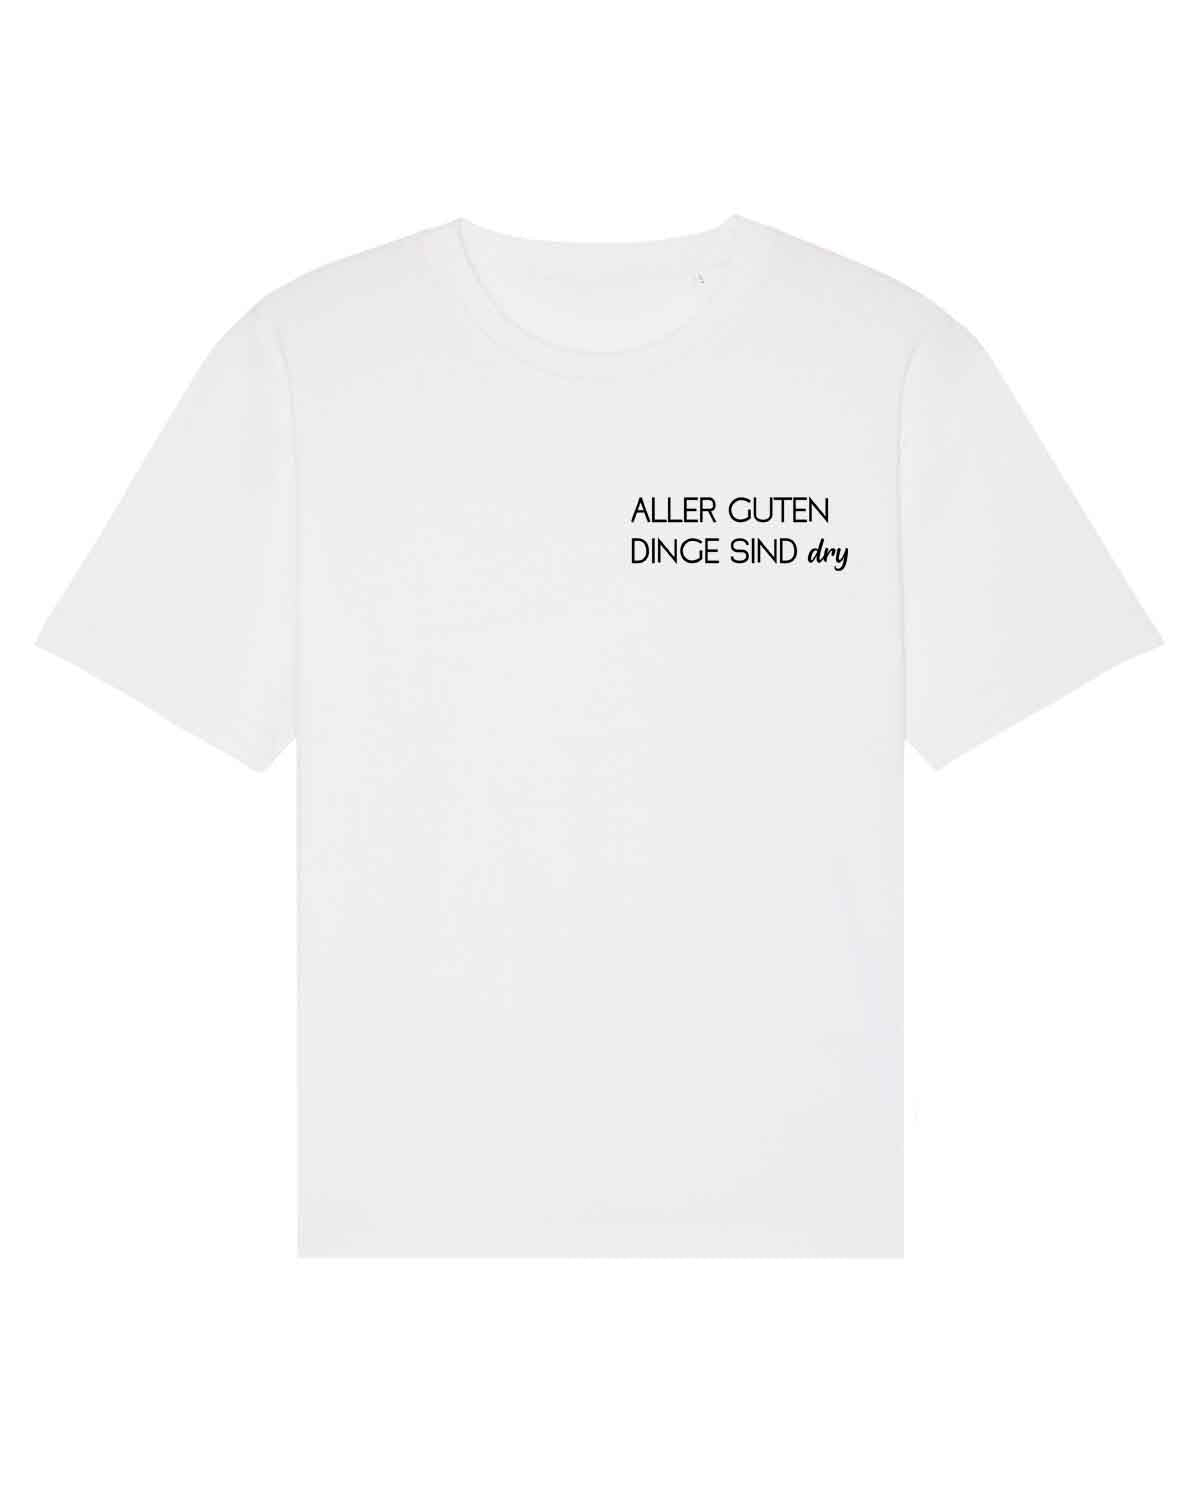 Aller guten Dinge sind dry- Oversize Unisex Shirt